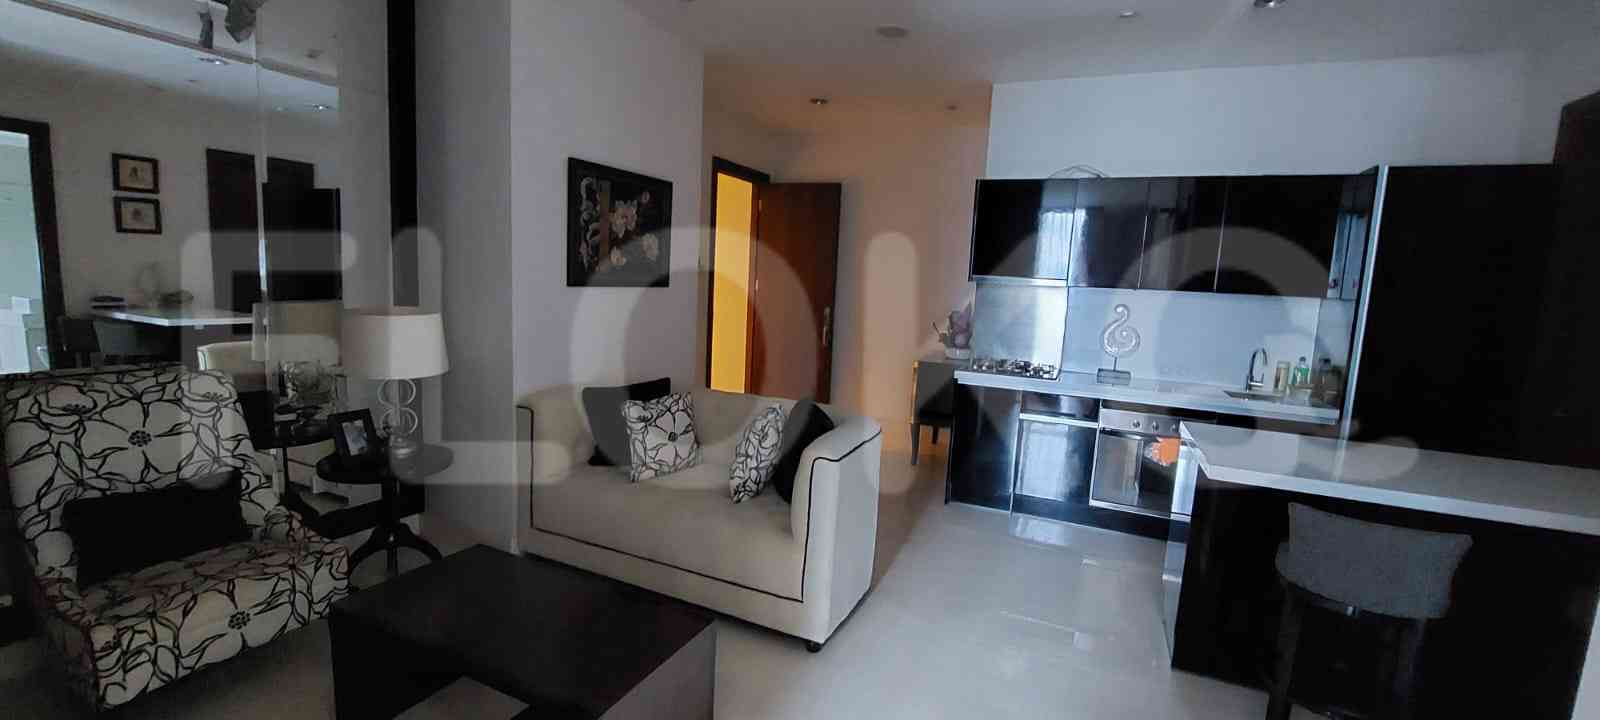 2 Bedroom on 19th Floor for Rent in Kemang Village Residence - fkeb83 6